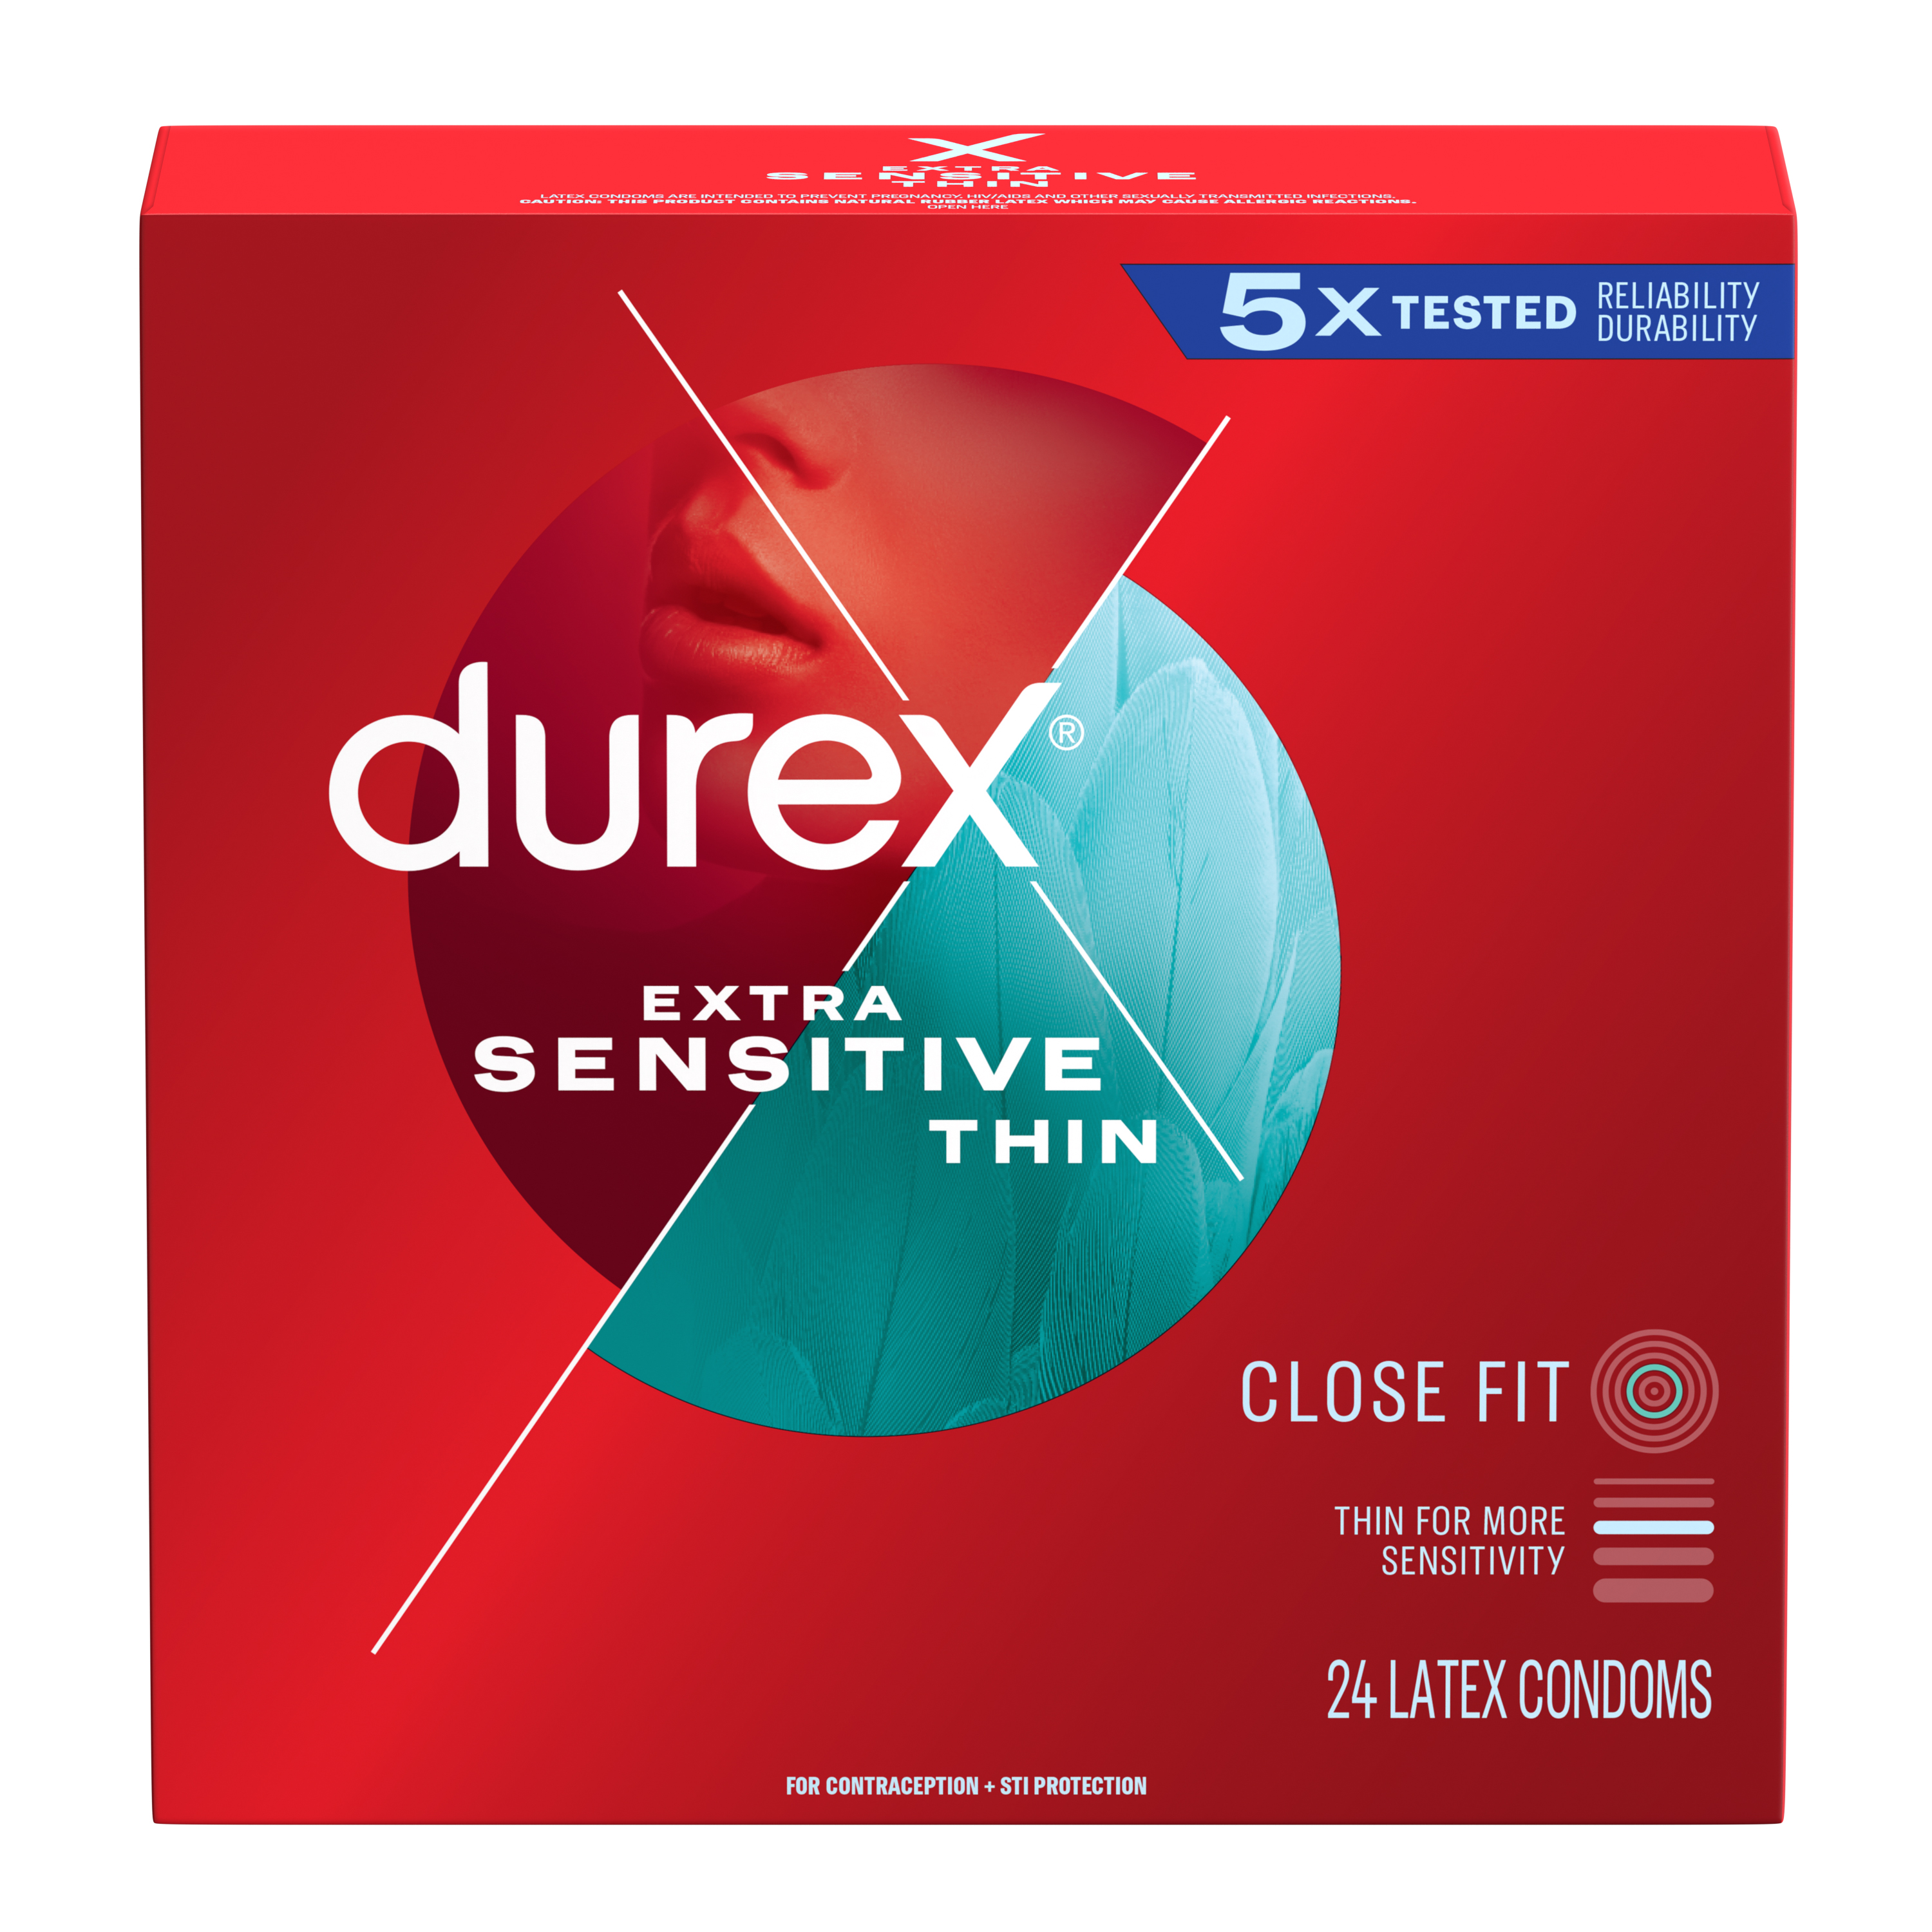 DUREX® Extra Sensitive™ Thin Condoms - Close Fit